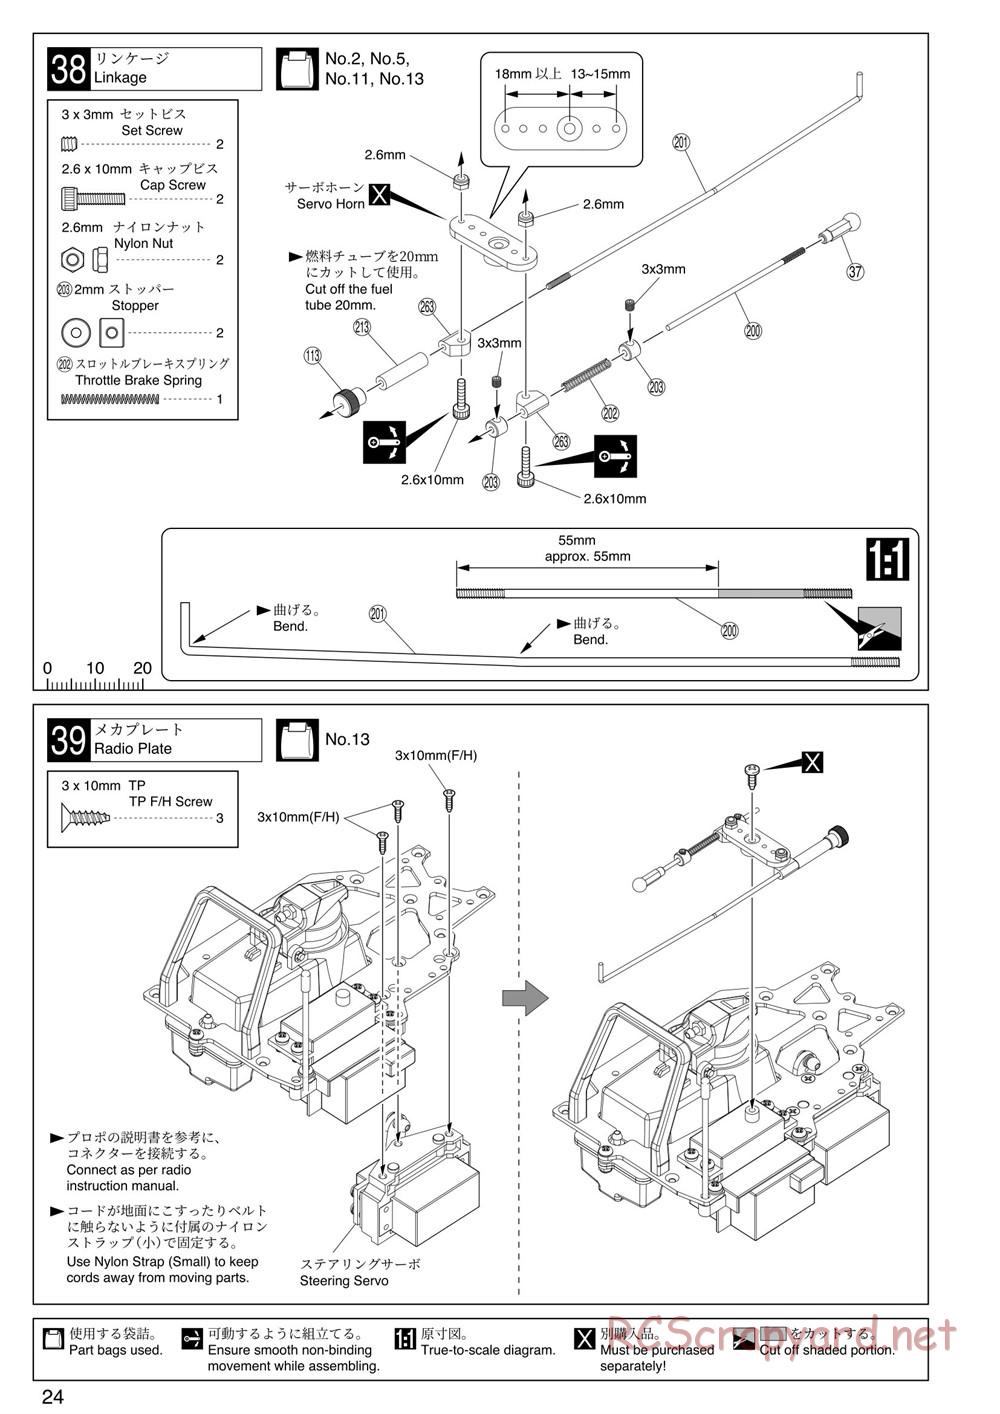 Kyosho - V-One RRR Evo - Manual - Page 24